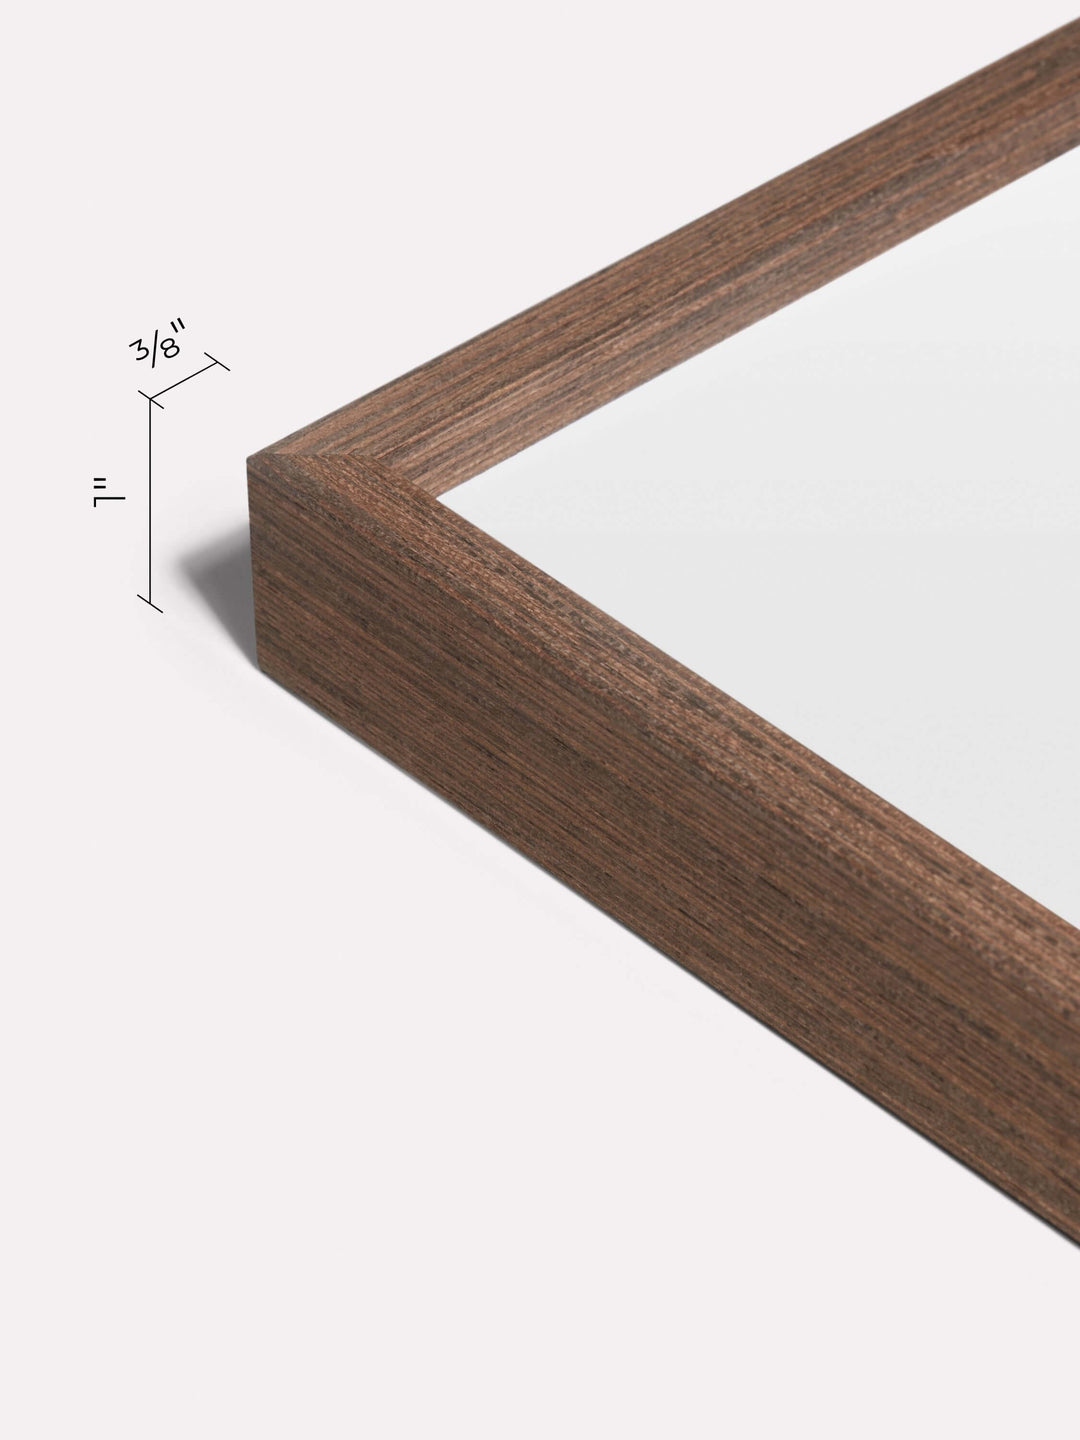 24x36-inch Thin Frame, Walnut - Close-up view